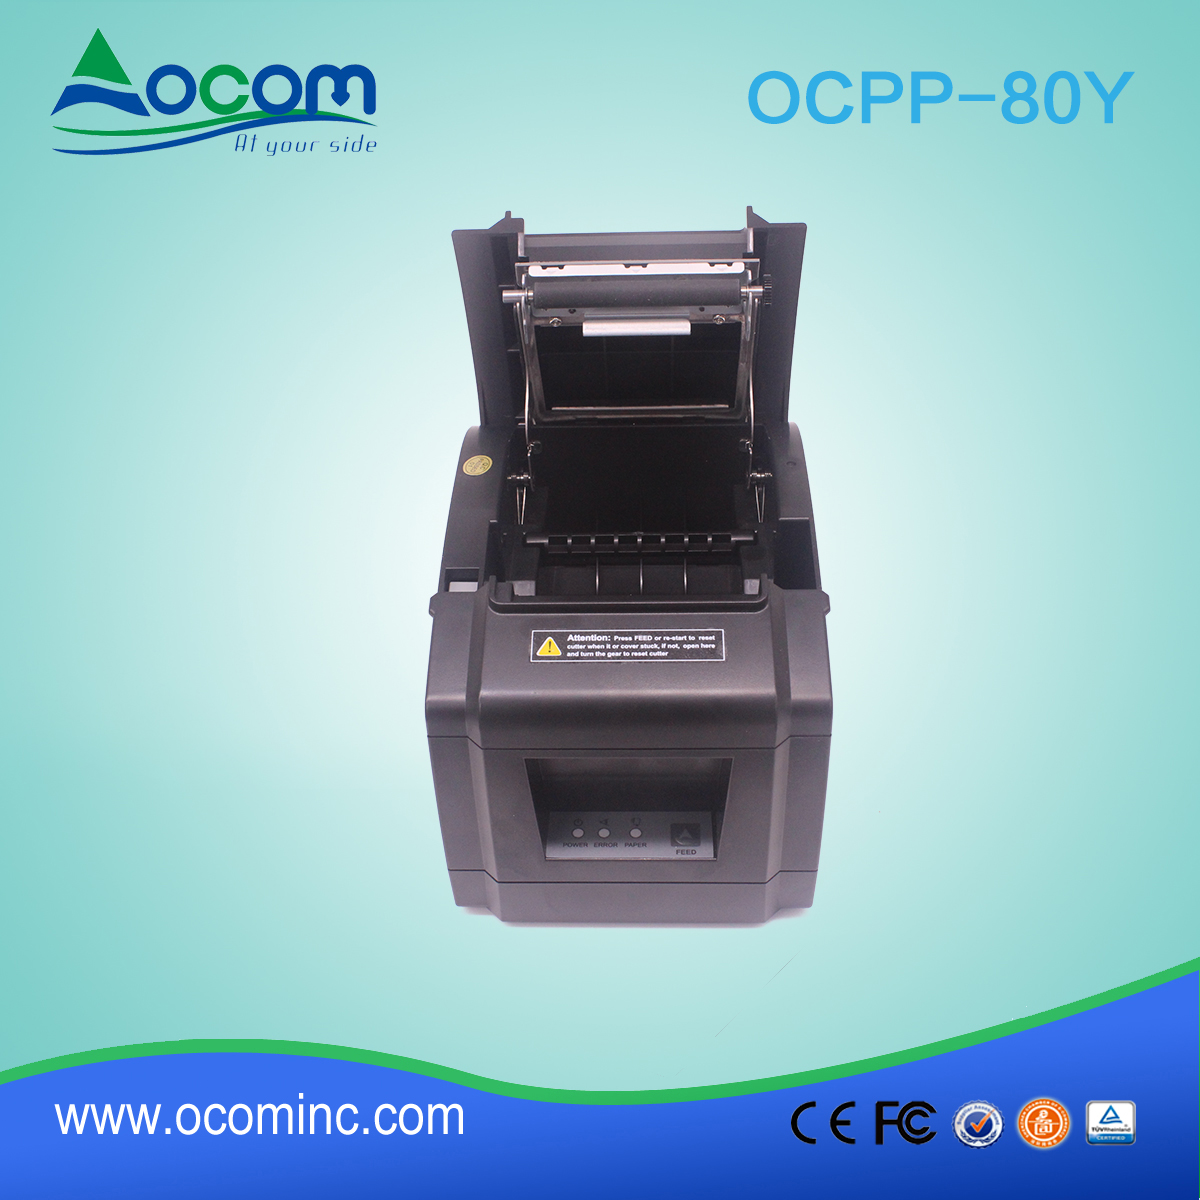 OCPP-80Y-China impressora térmica barata de 80mm com cortador automático